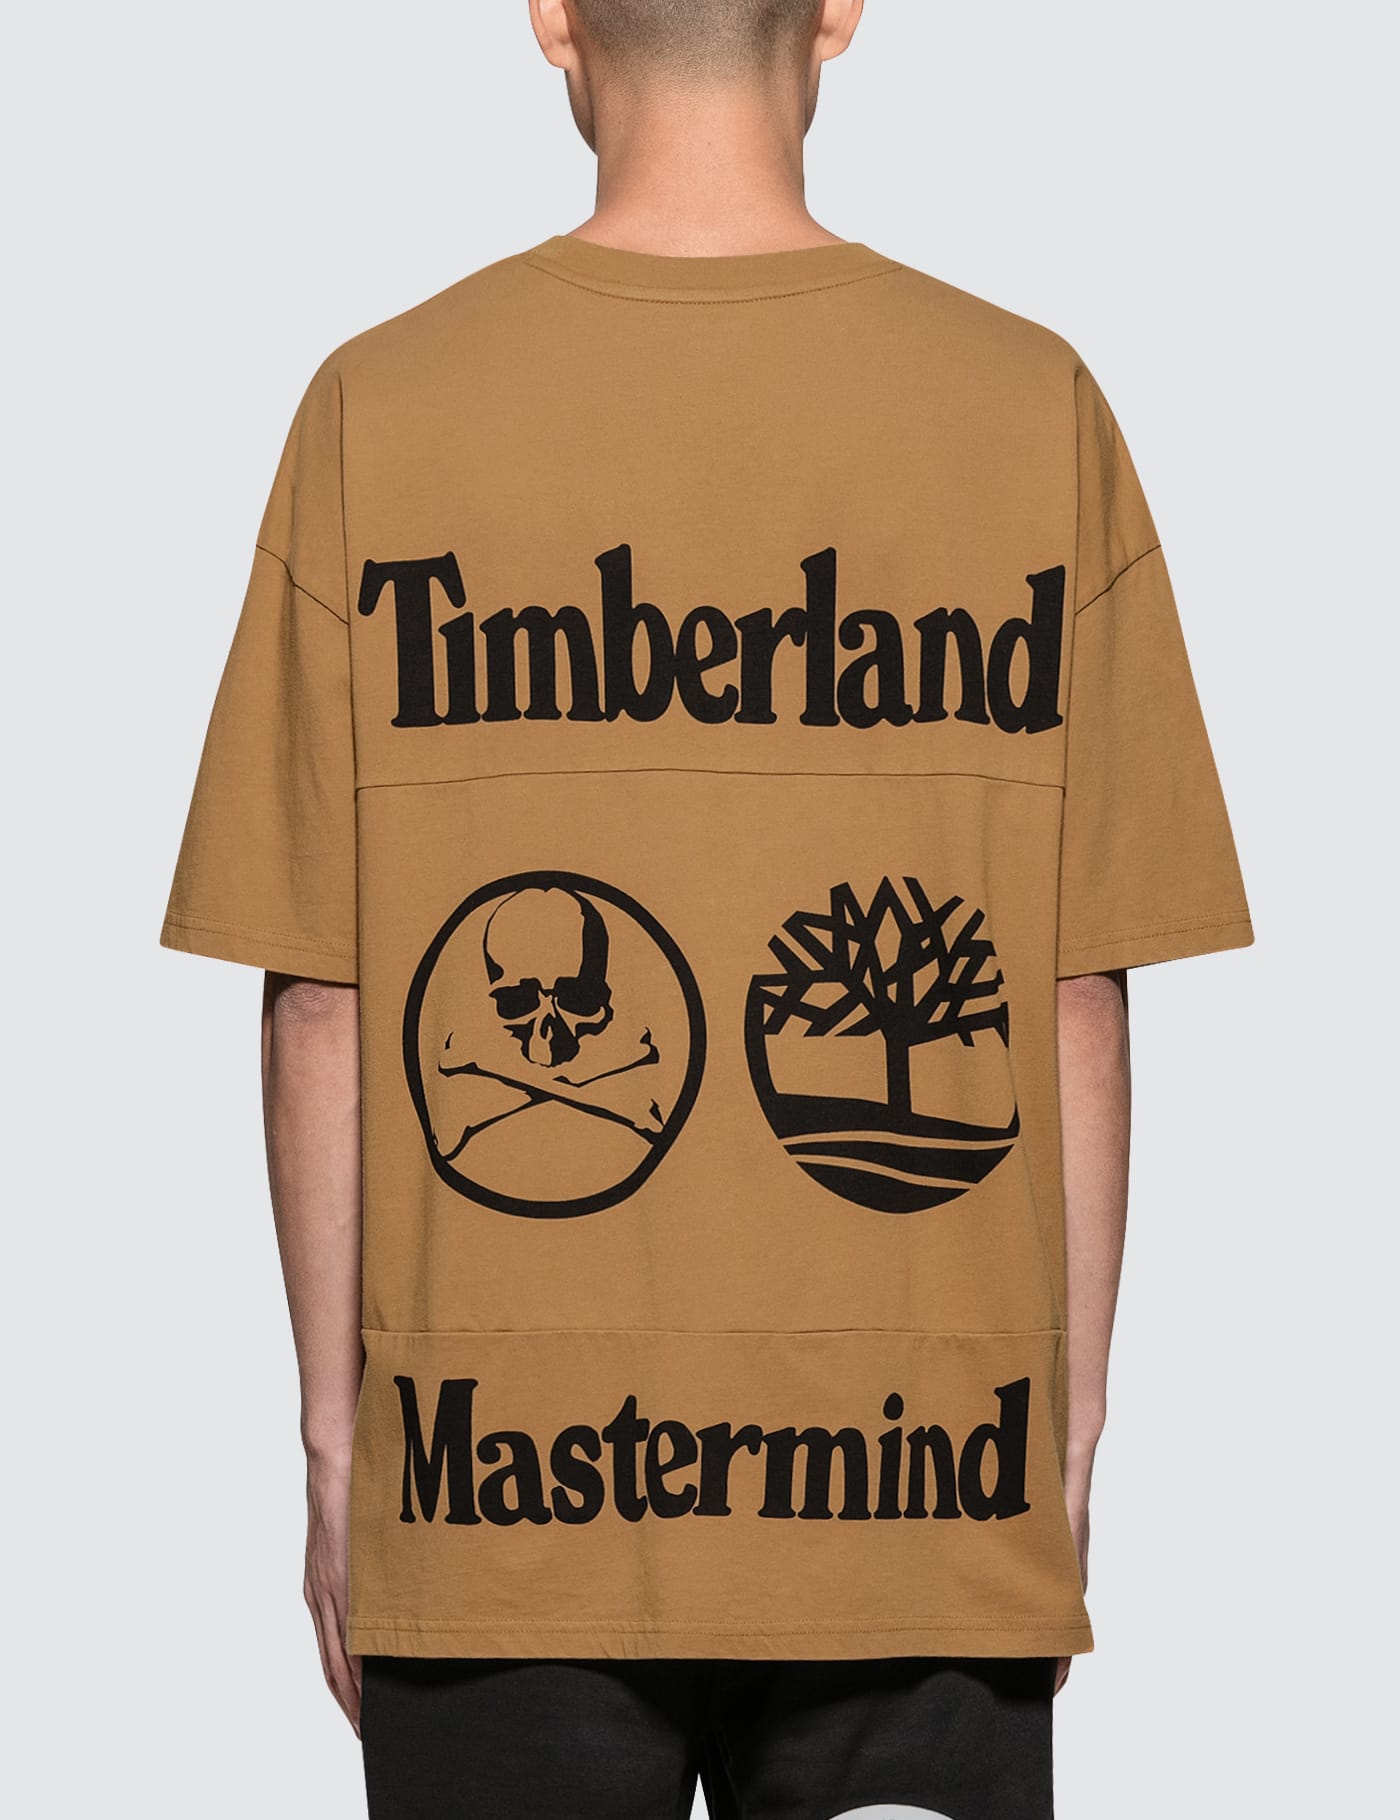 timberland mastermind t shirt